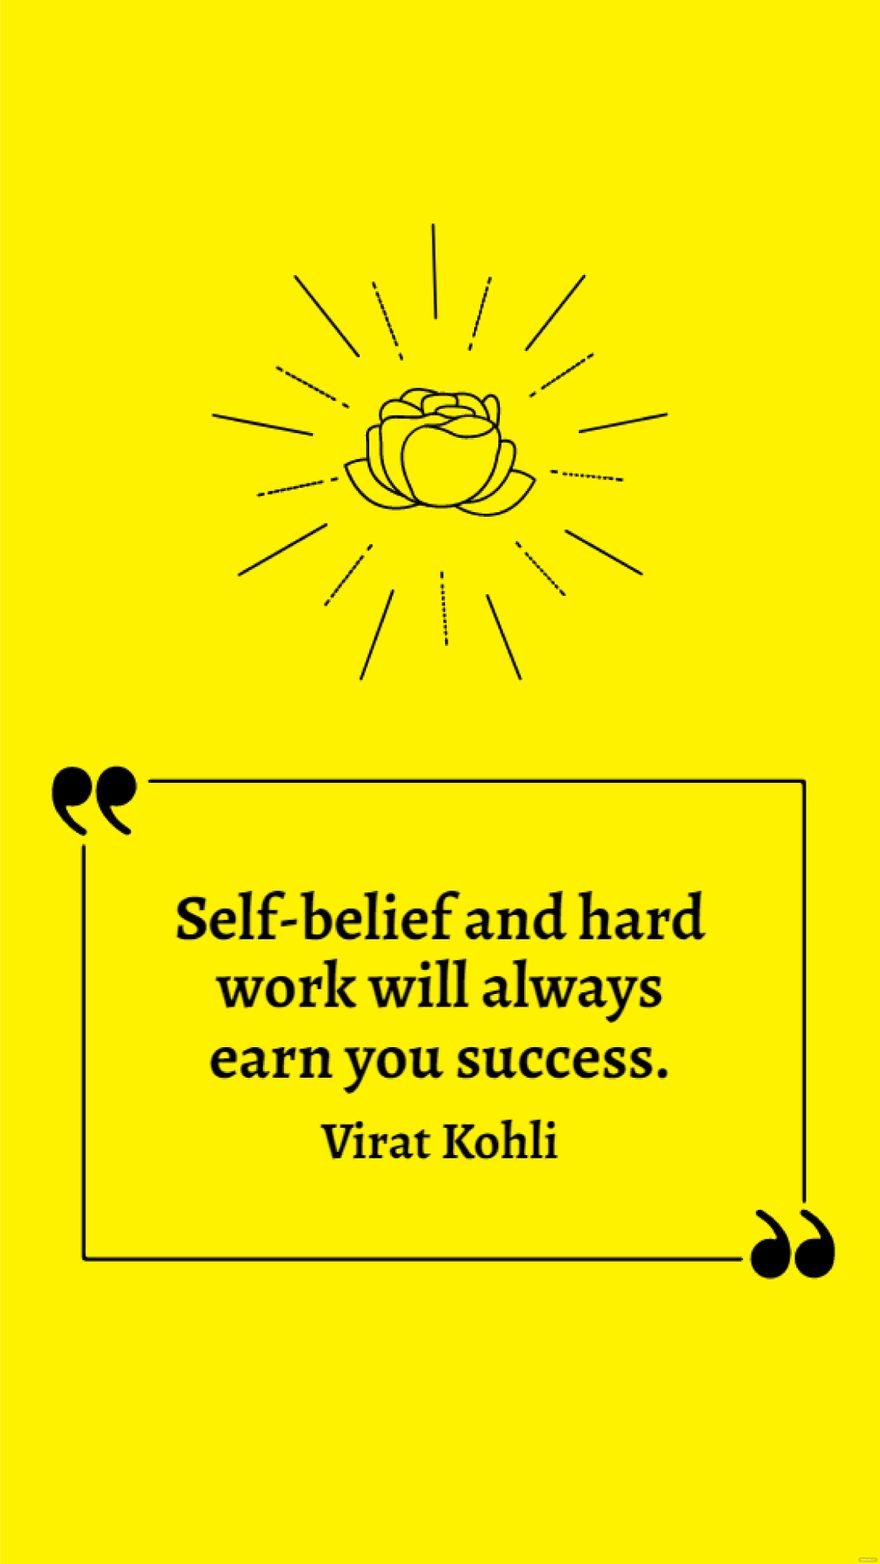 Virat Kohli - Self-belief and hard work will always earn you success.